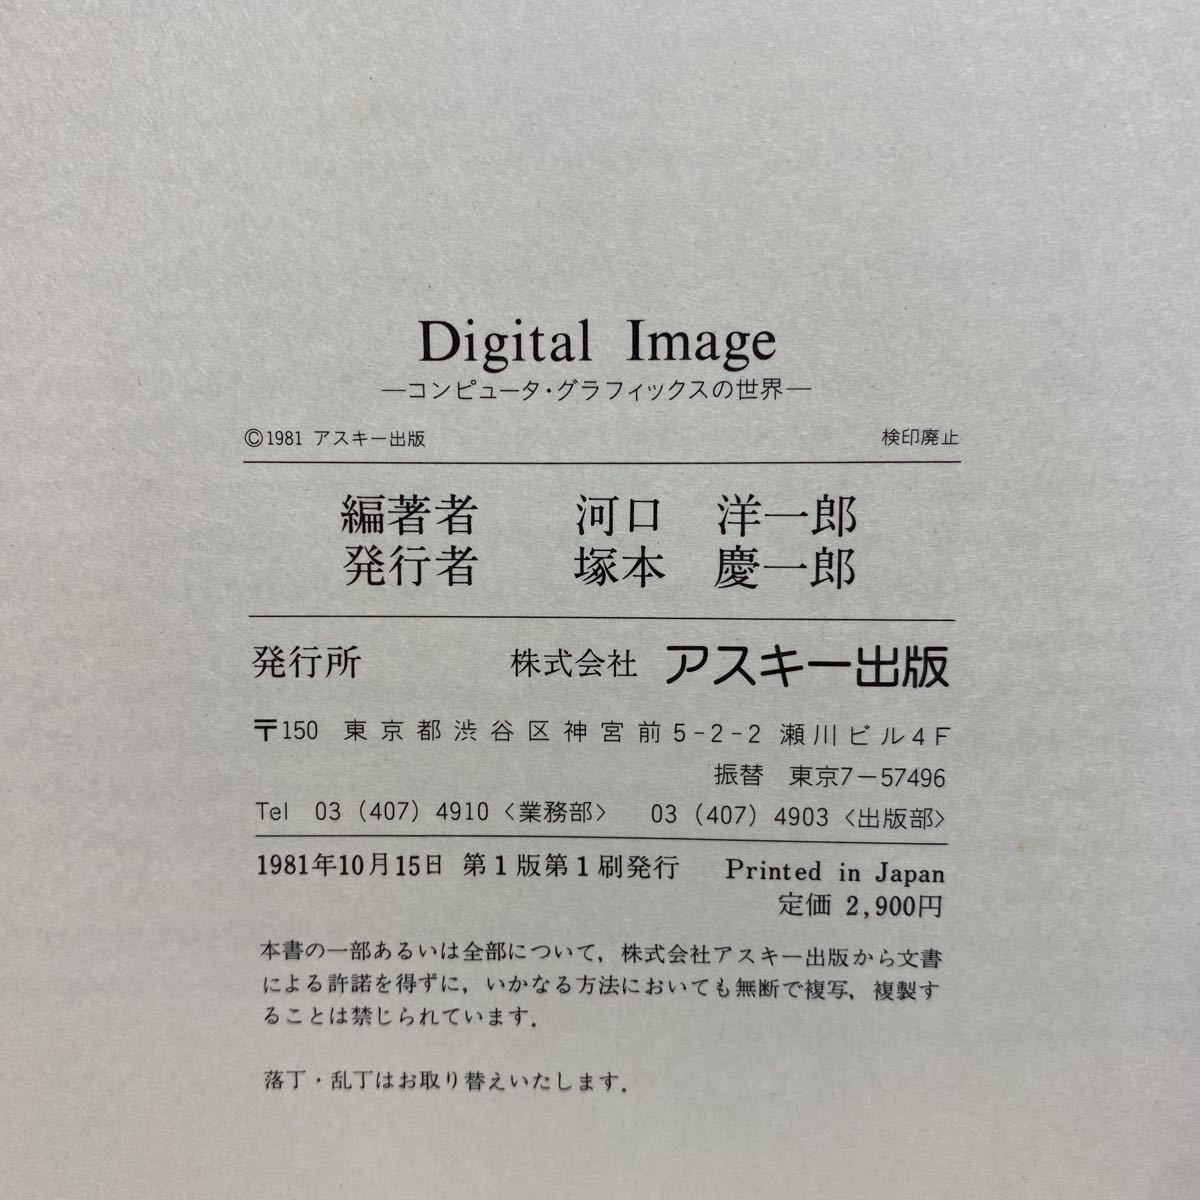 z4/Digital Image computer * graphics. world Kawaguchi . one . ASCII publish Japanese English Yu-Mail postage 180 jpy 